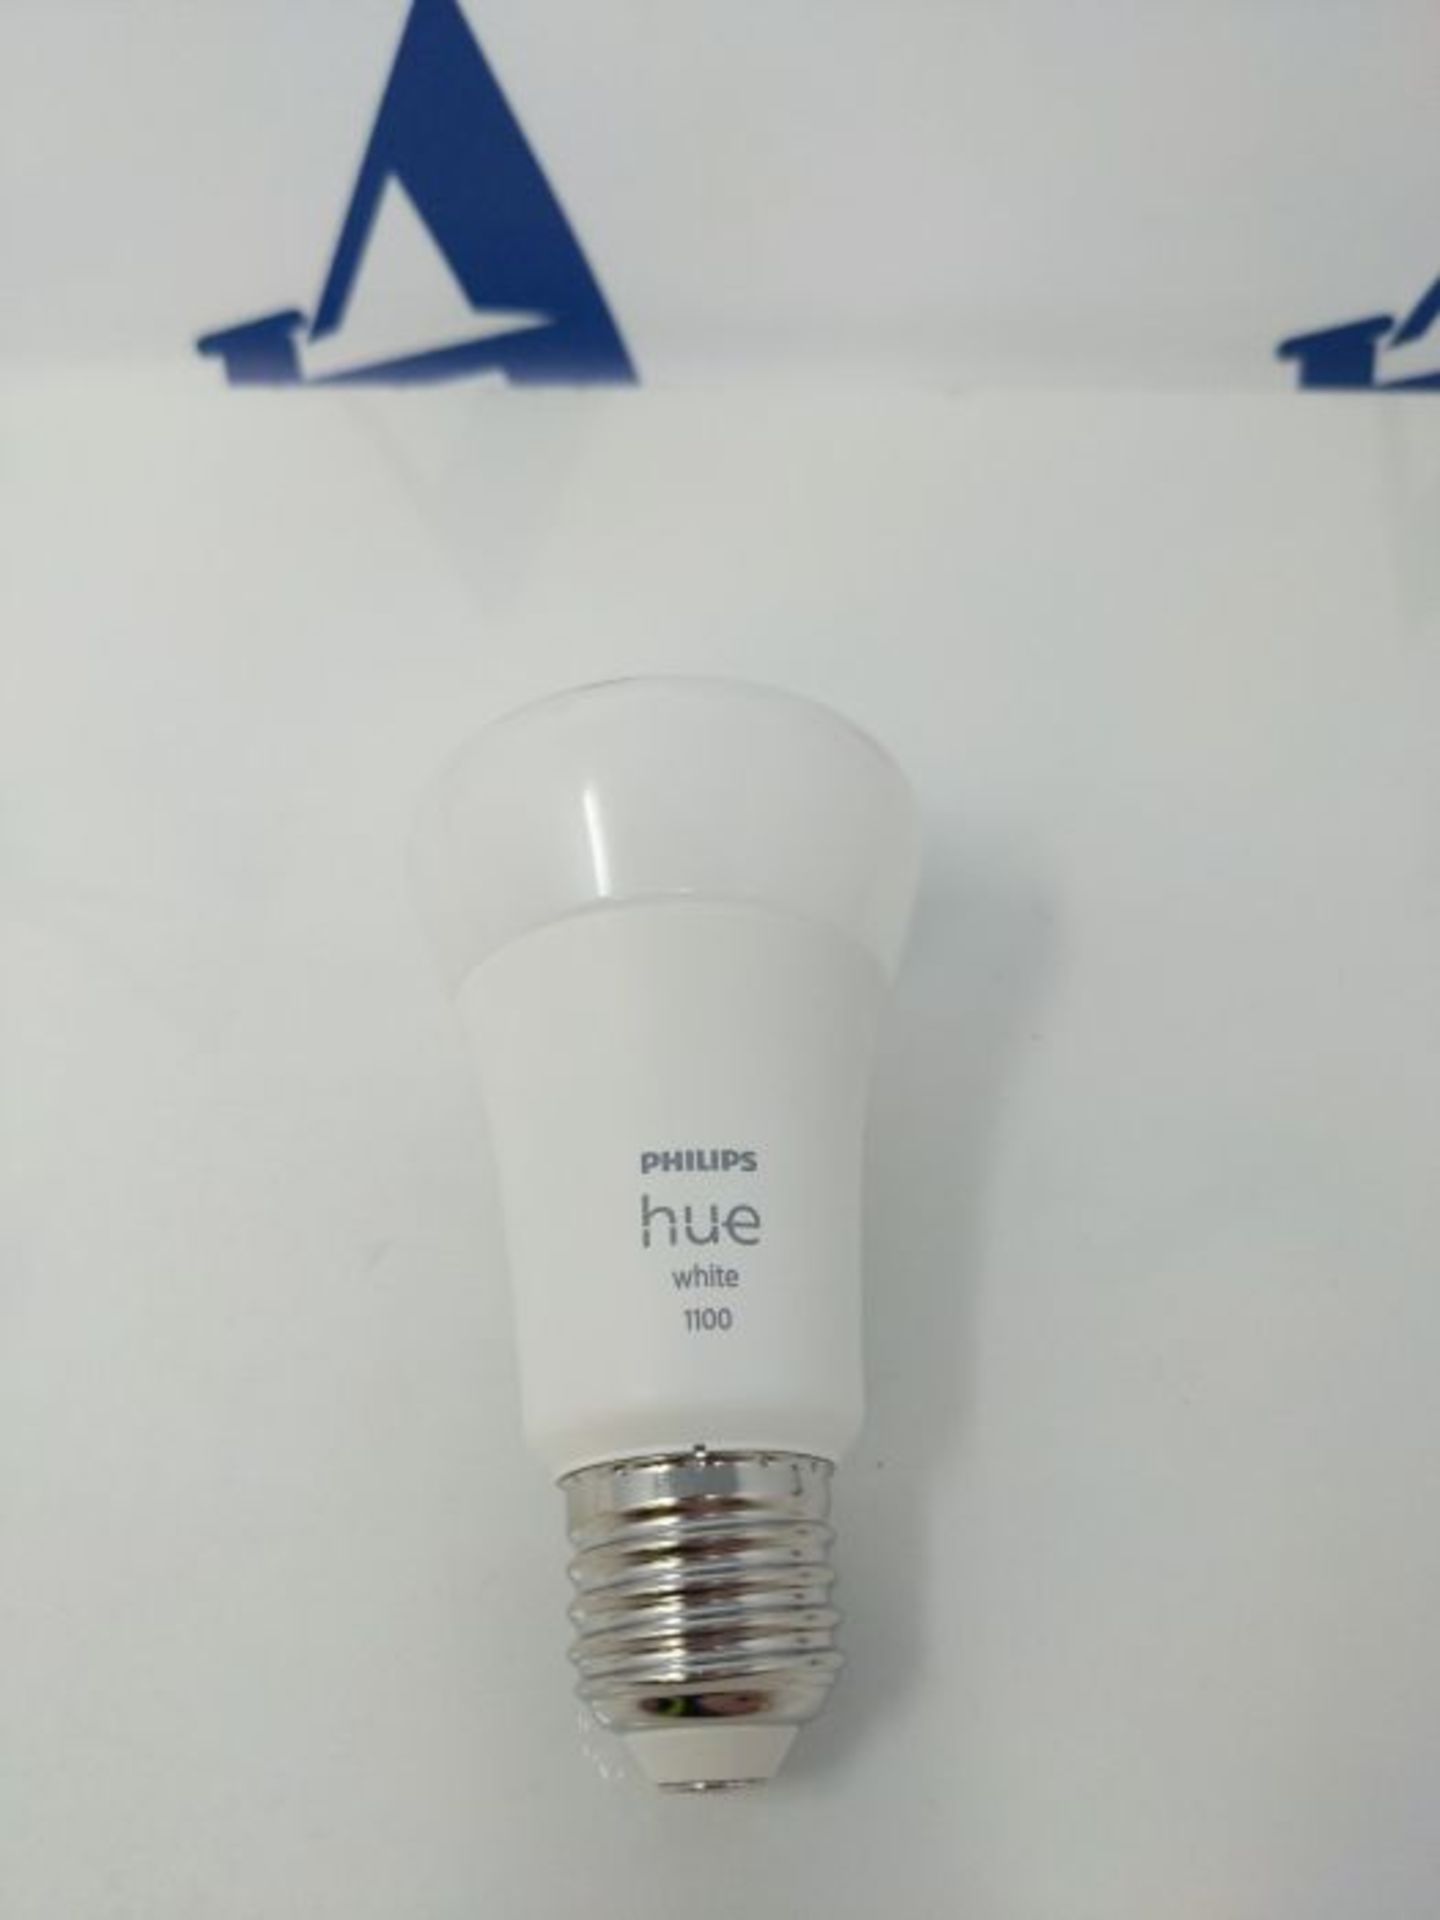 Philips Hue White Lampadina LED Smart, con Bluetooth, E27, 9.5W, Dimmerabile, 1100 Lum - Image 2 of 2